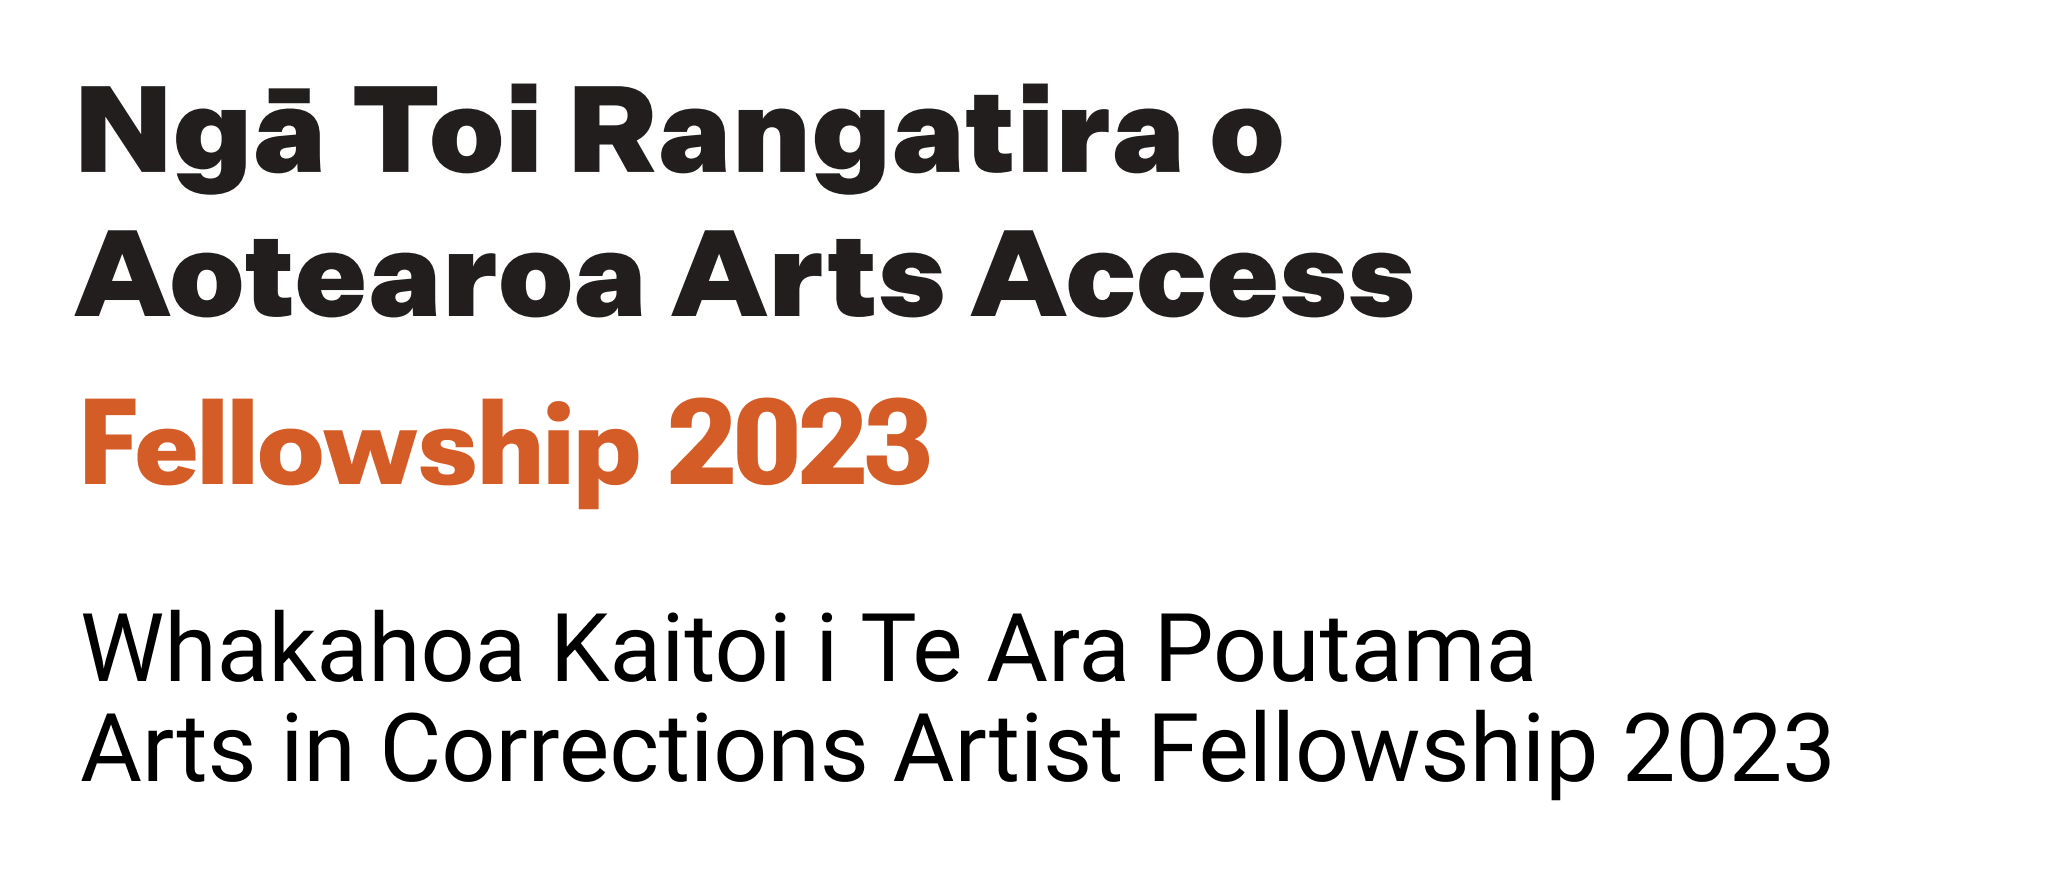 The logo has the words Ngā Toi Rangatira o Aotearoa Arts Access Fellowships 2023, followed by the words Whakahoa Kaitoi i Te Ara Poutama Arts in Corrections Artist Fellowship